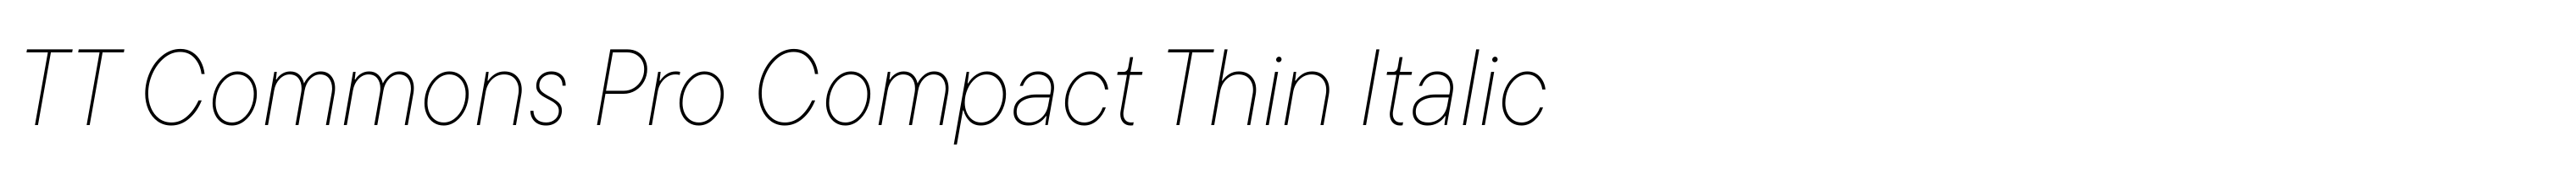 TT Commons Pro Compact Thin Italic